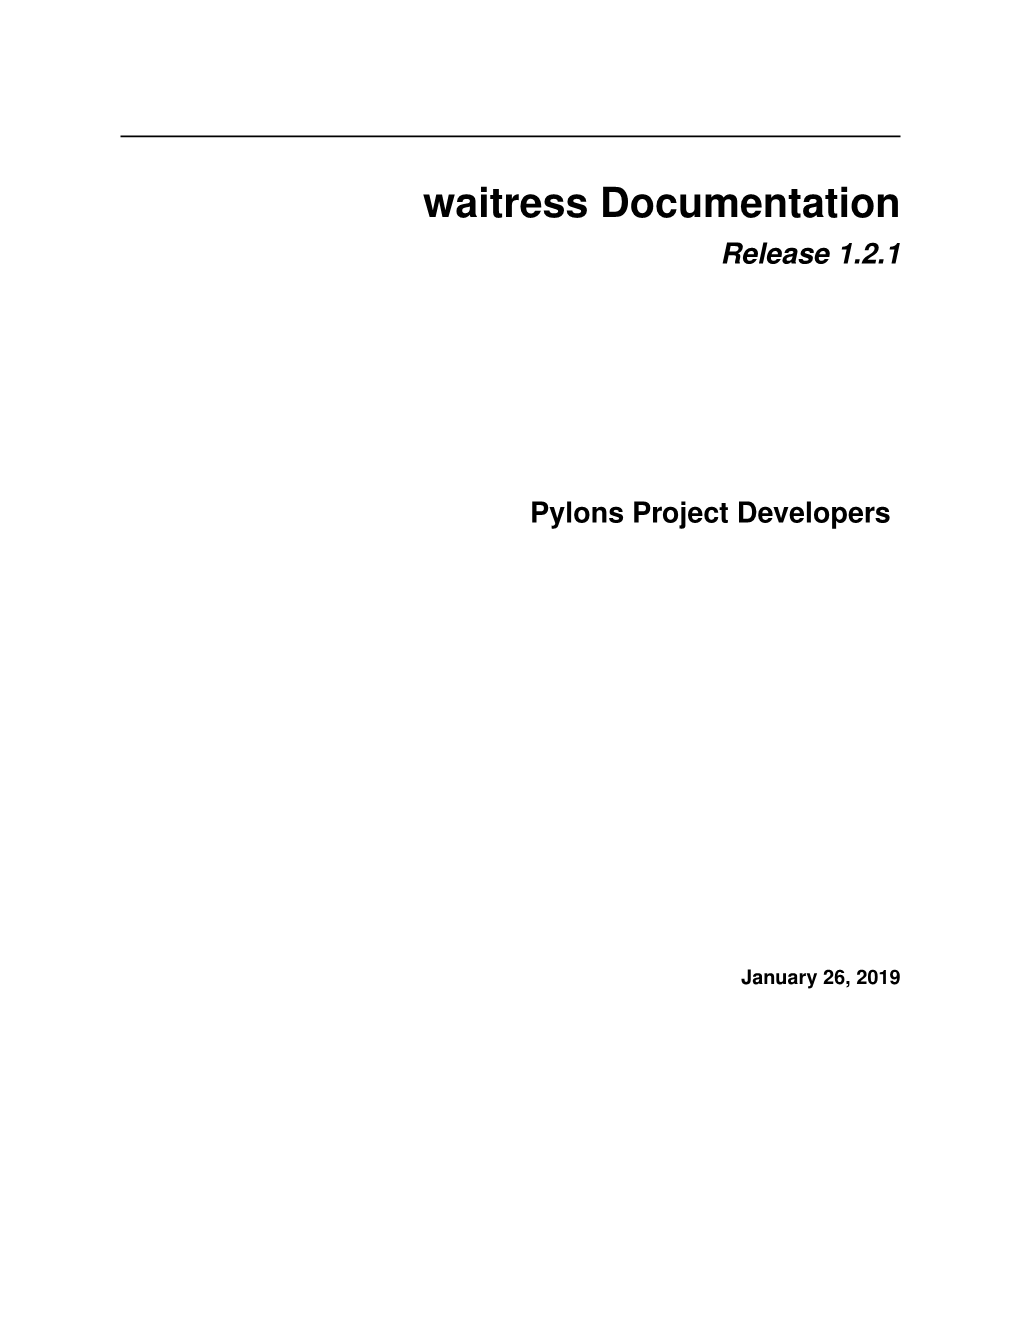 Waitress Documentation Release 1.2.1